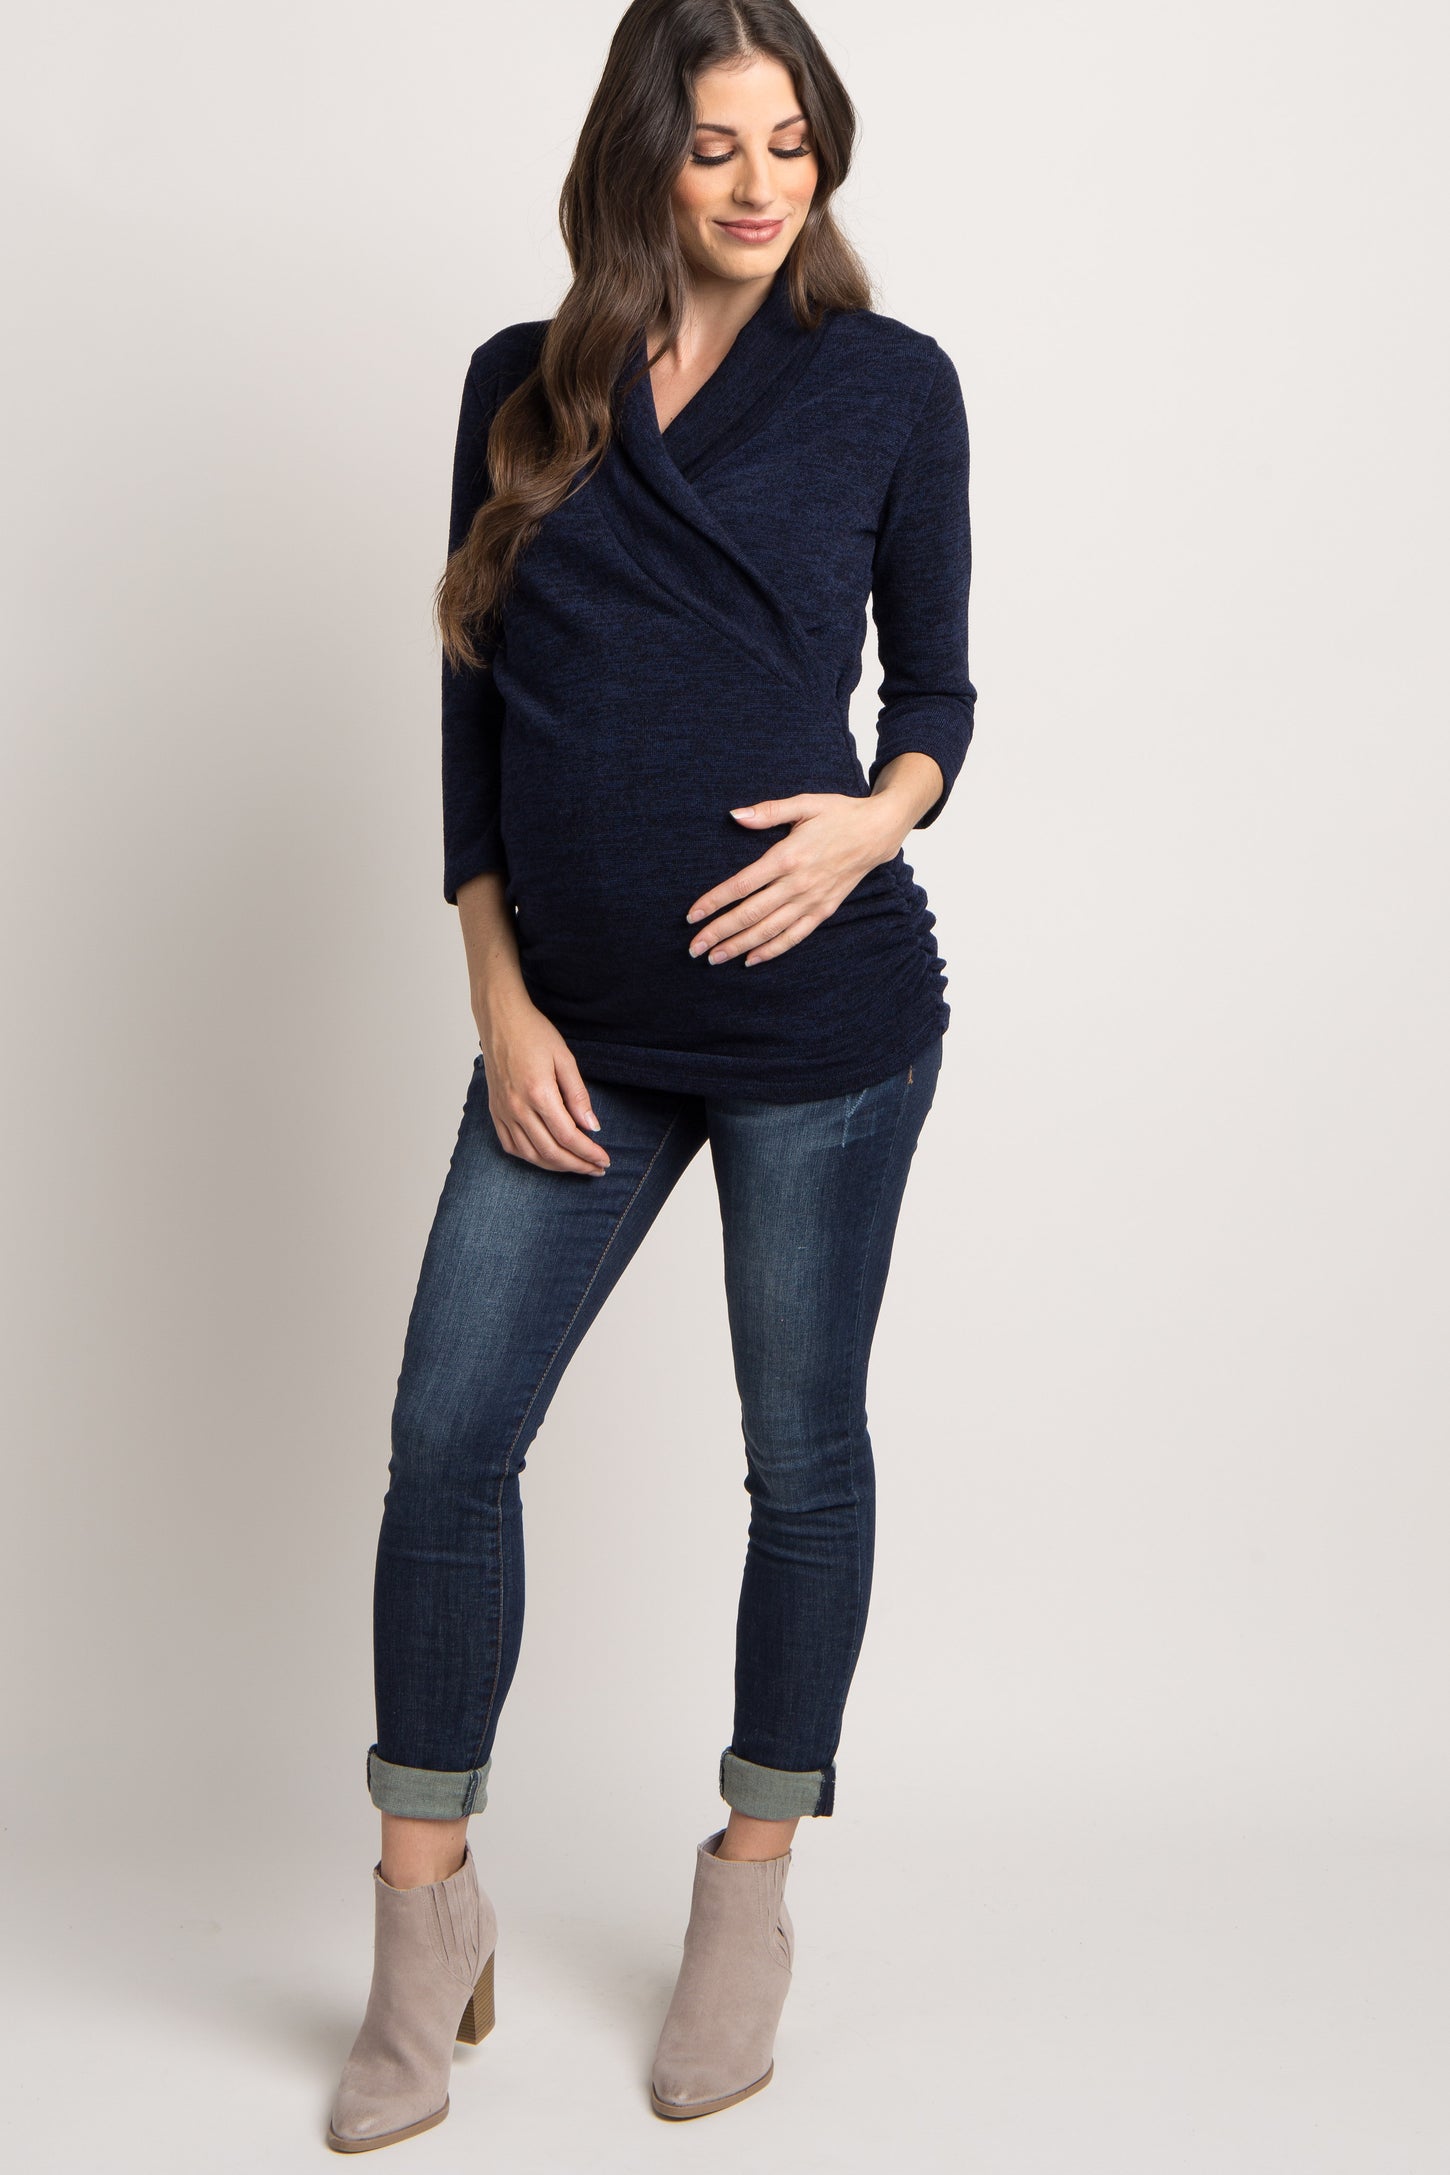 Navy Blue Knit Maternity/Nursing Top